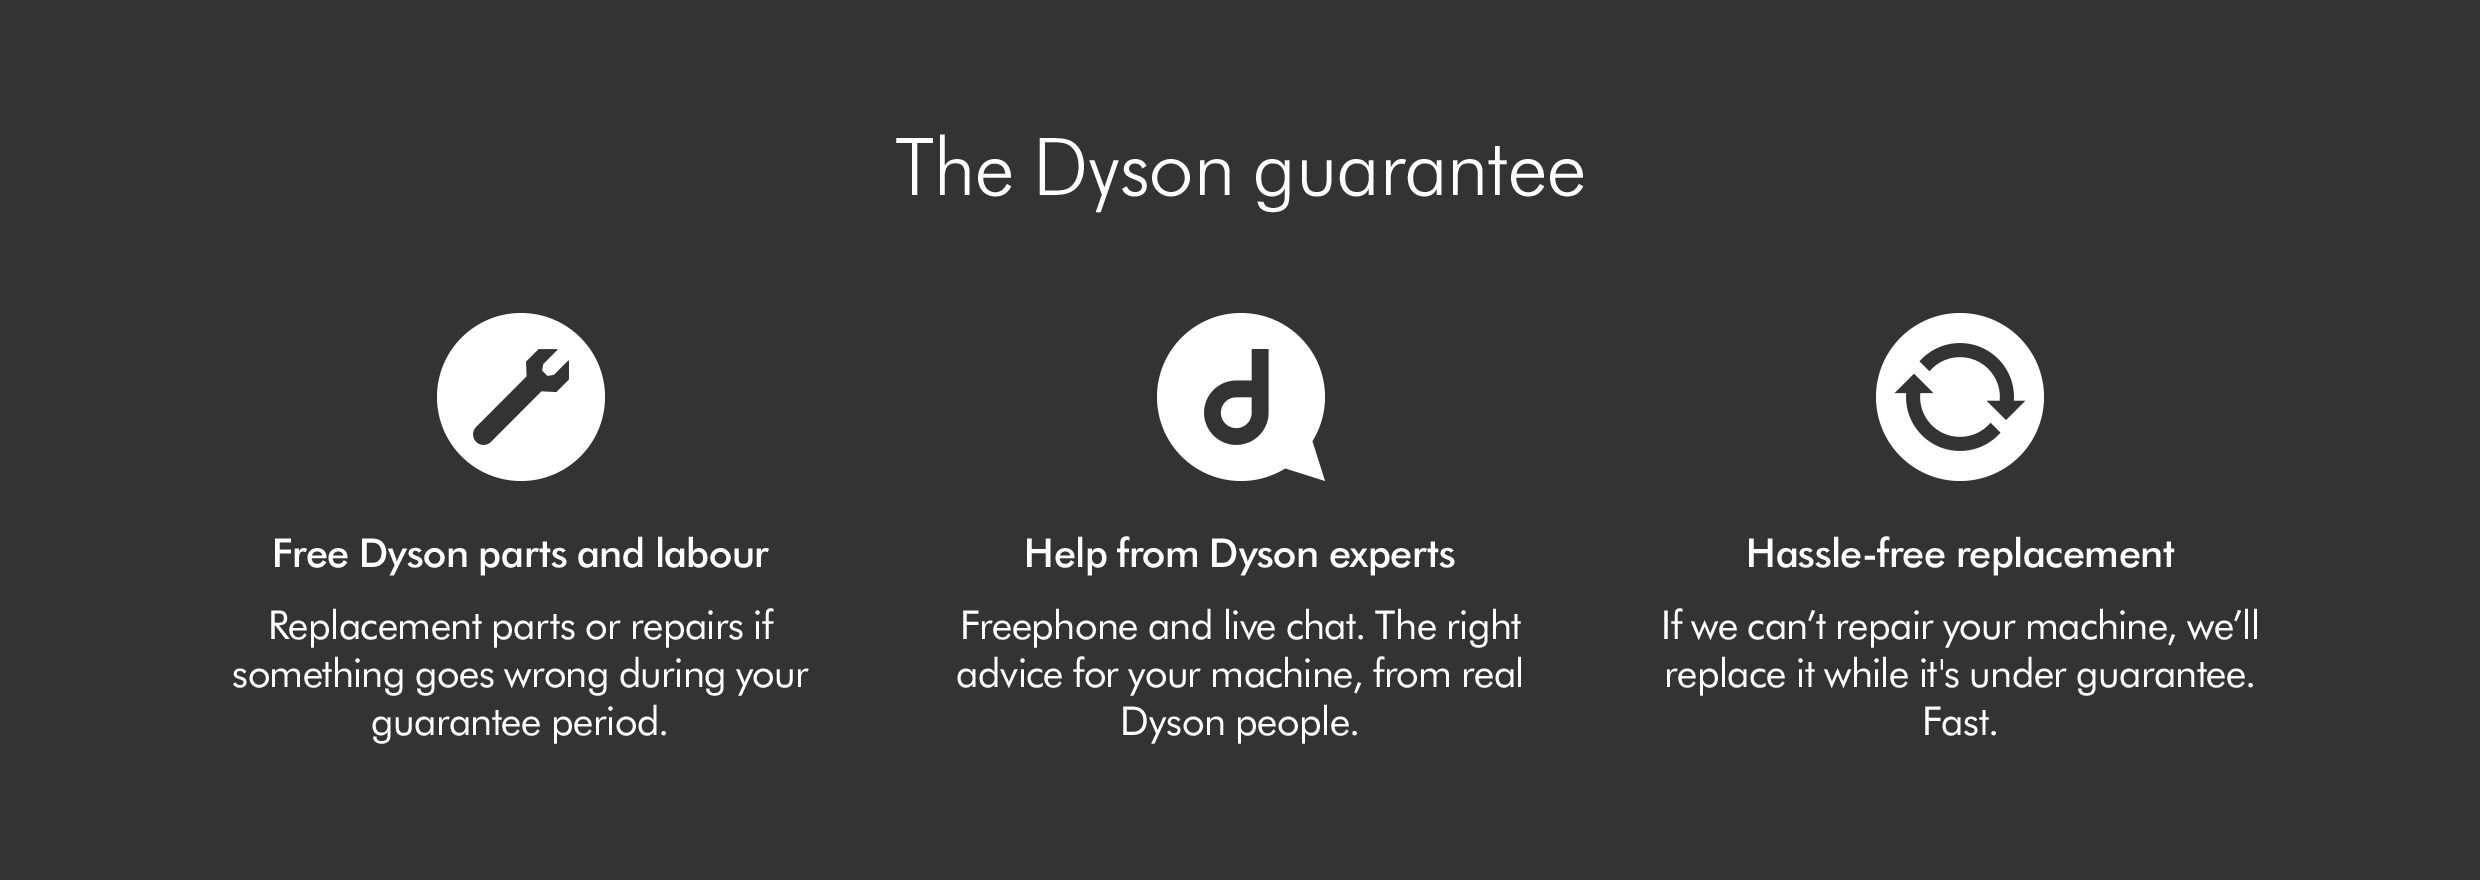 The Dyson Guarantee